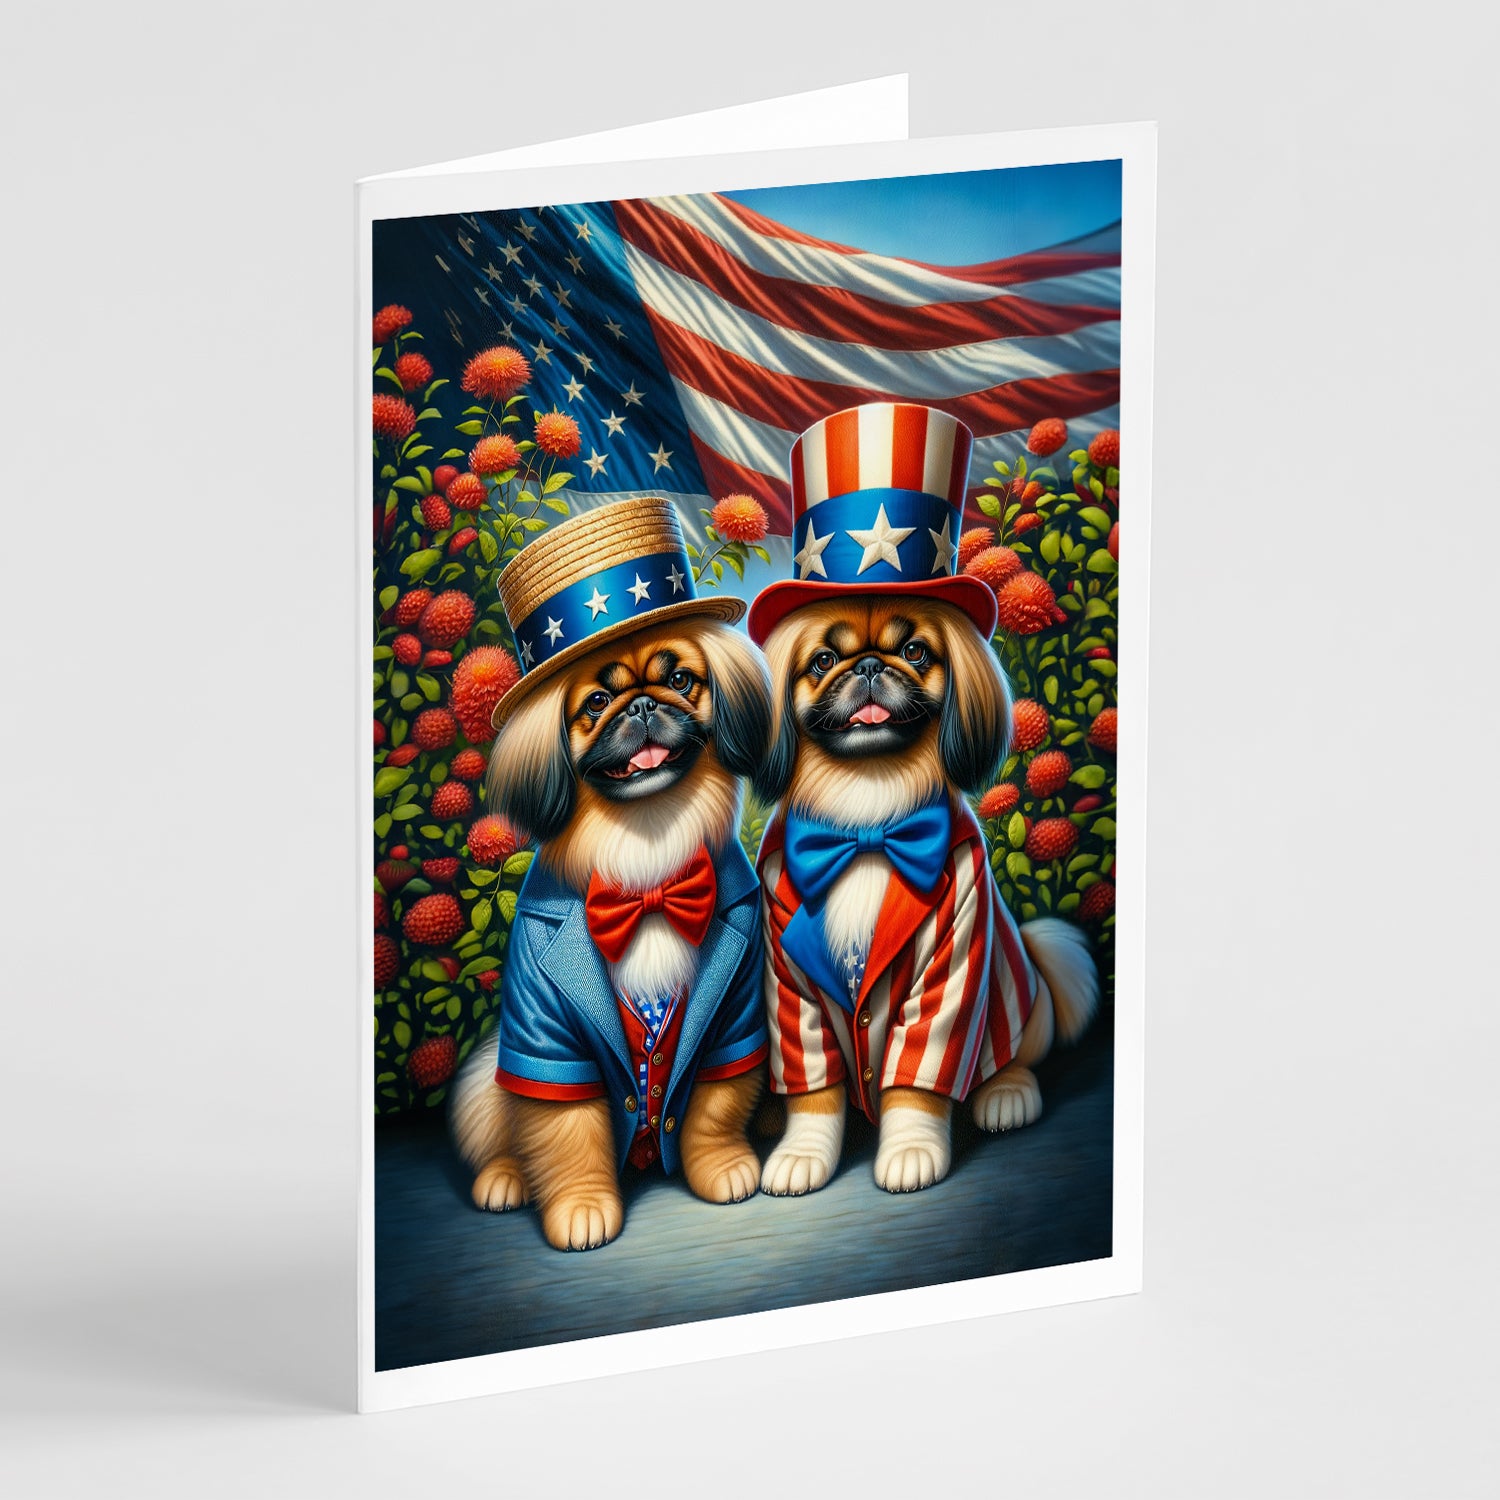 Buy this All American Pekingese Greeting Cards Pack of 8